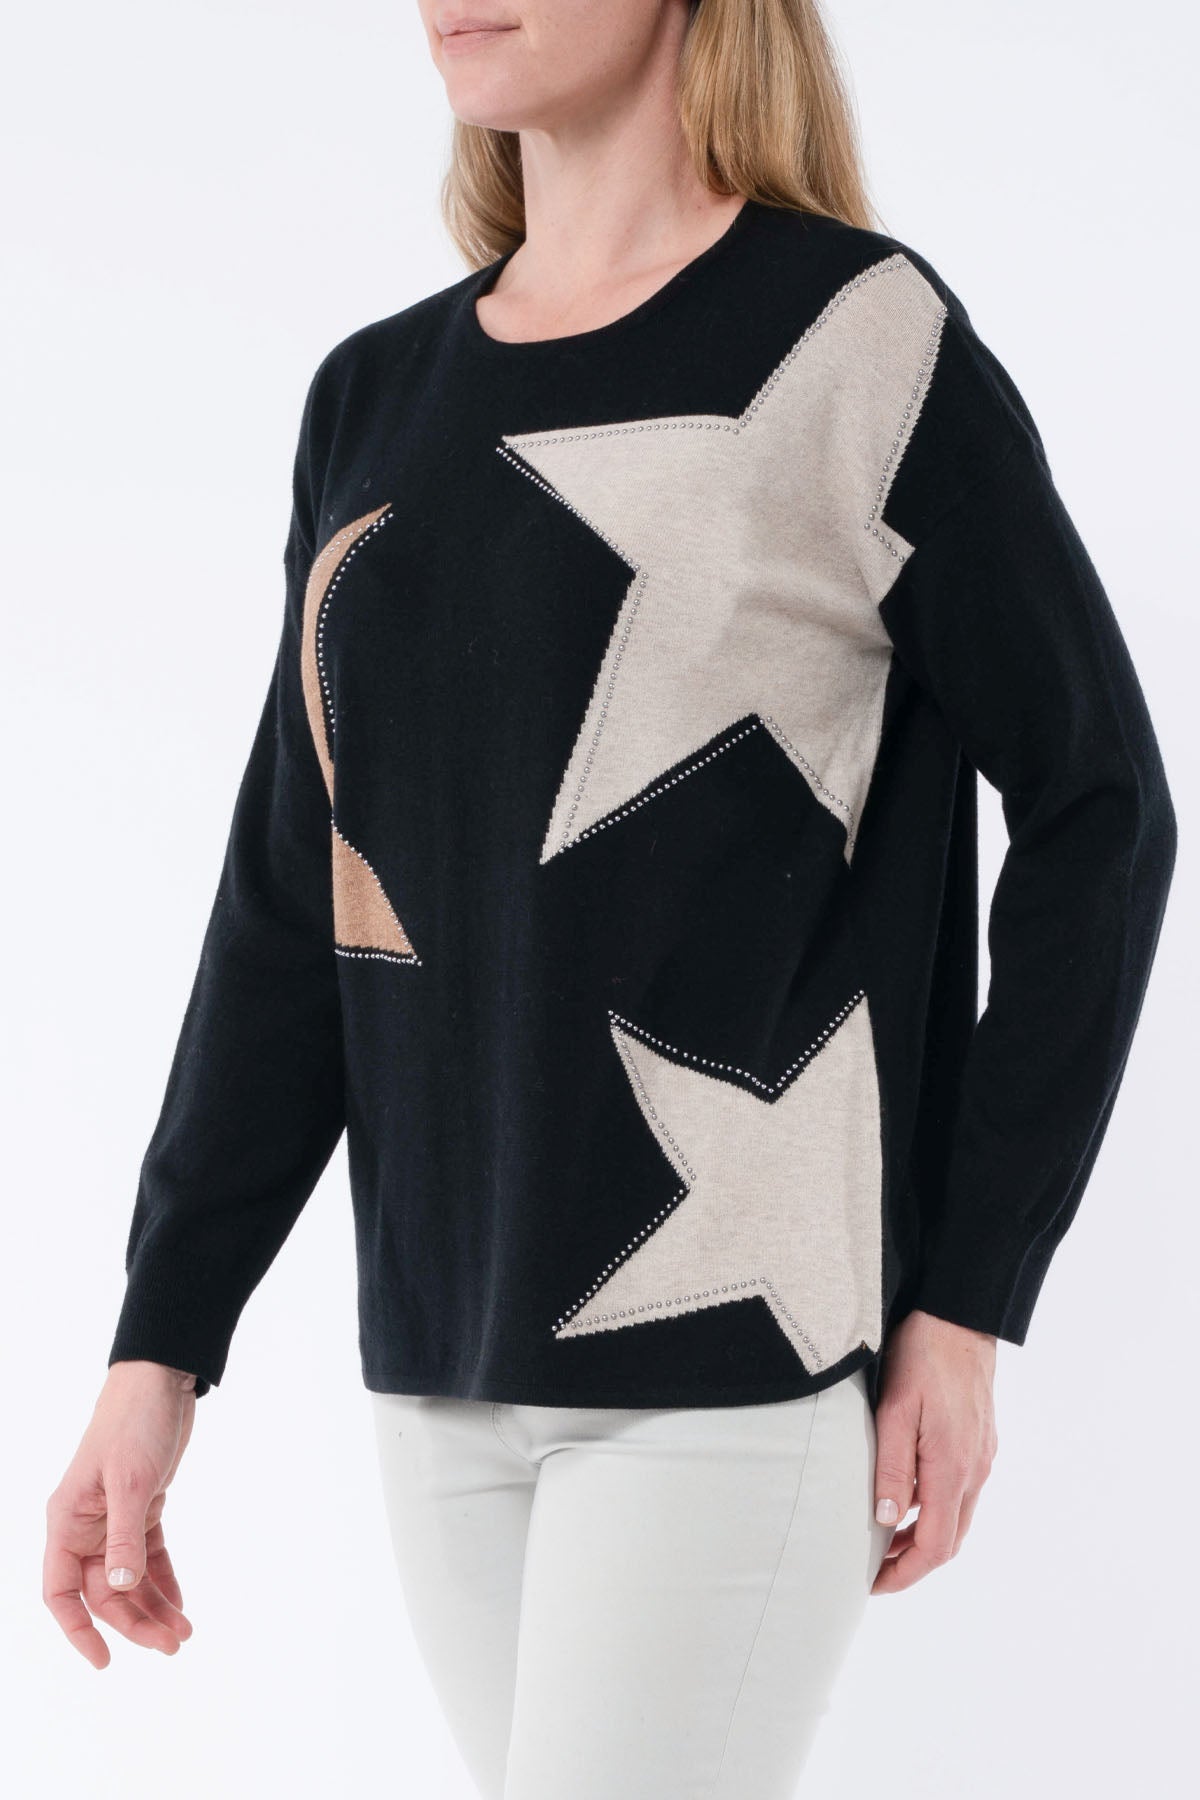 Studded Star Pullover